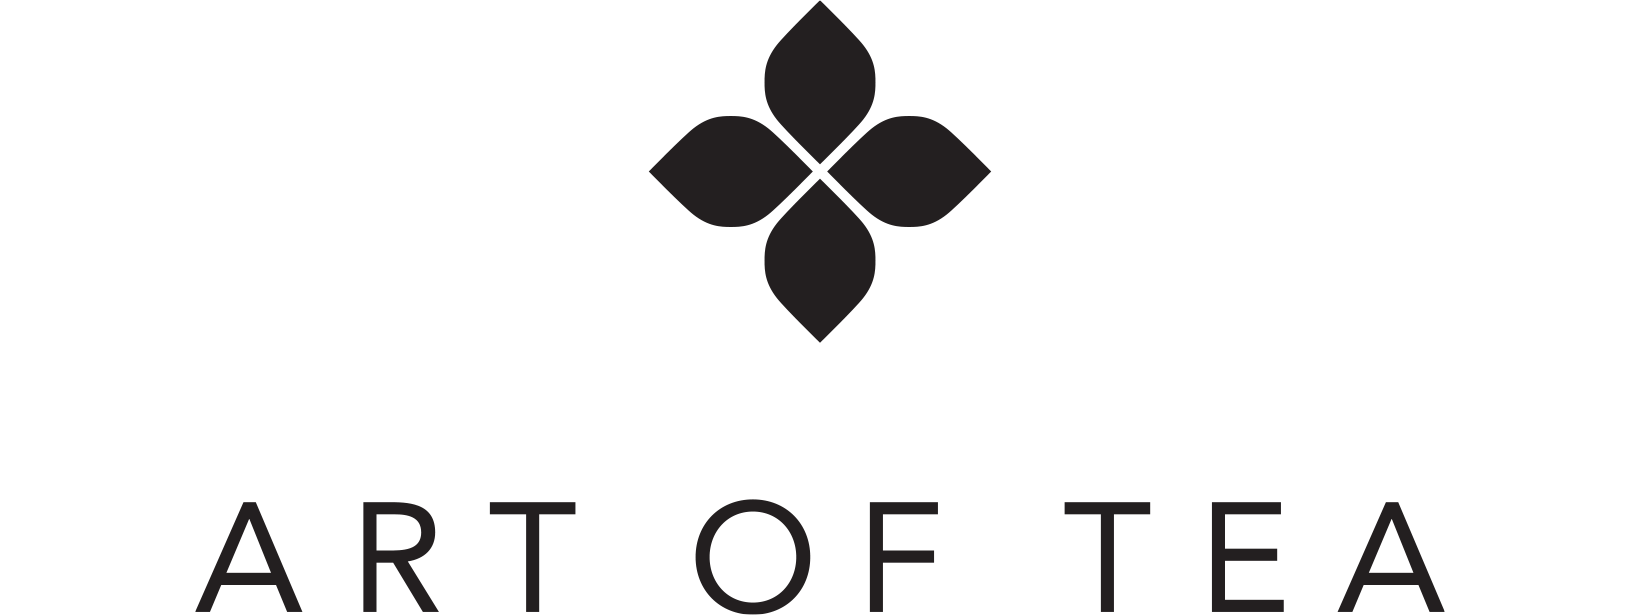 Art of Tea logo